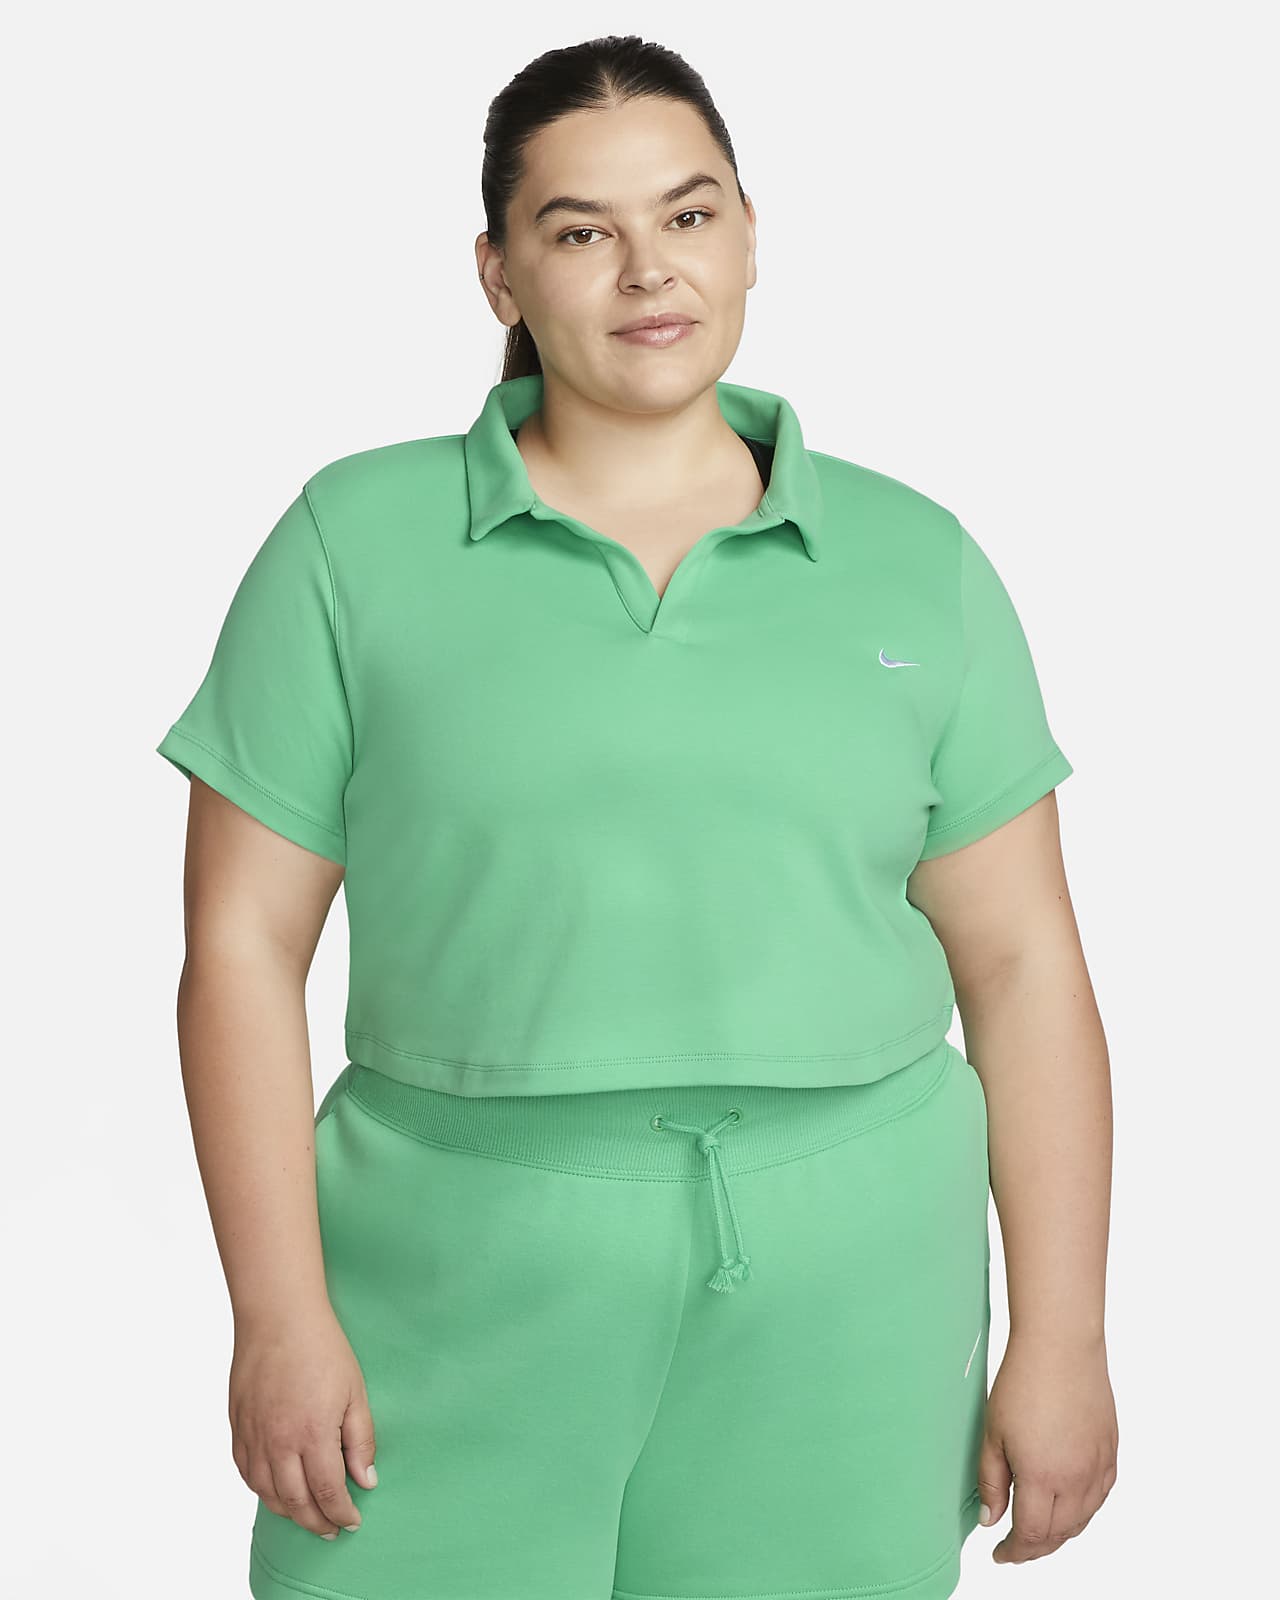 Short Sleeve Tops, Women's Plus Size Clothing